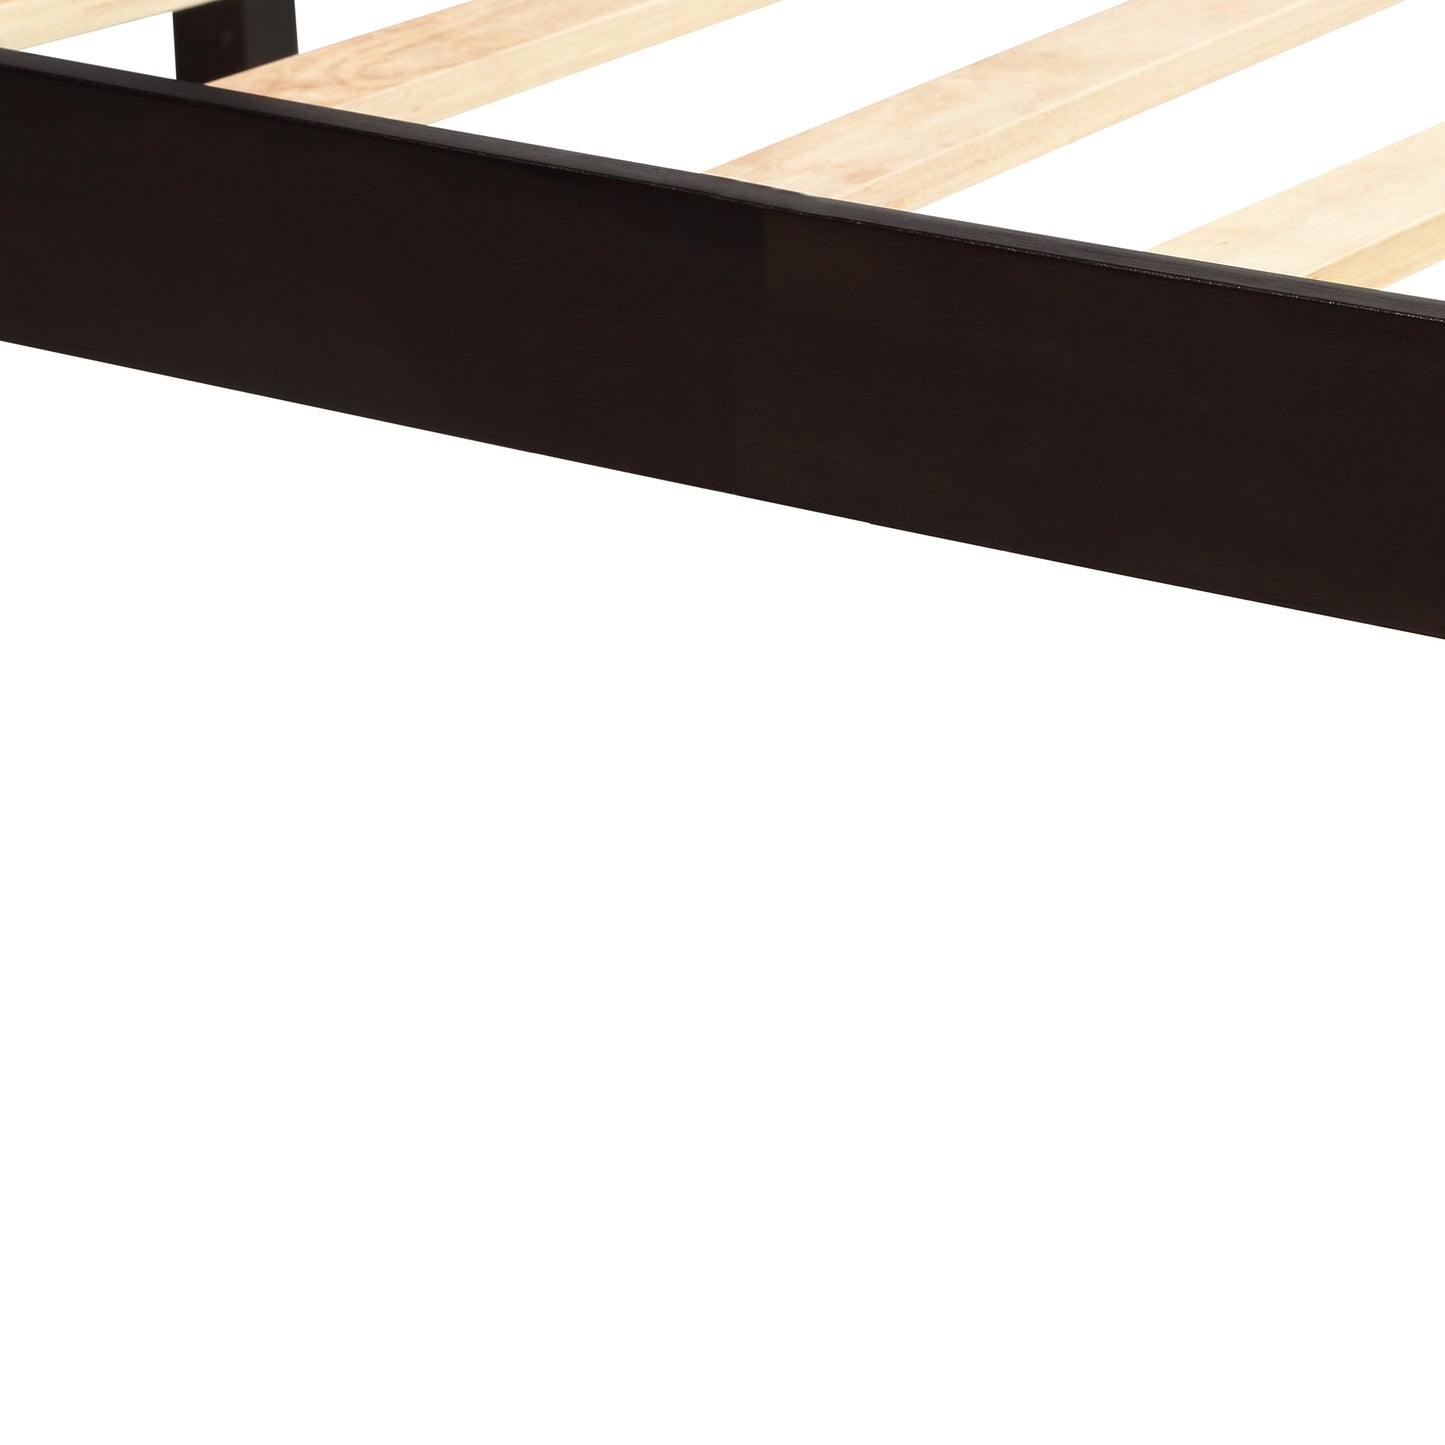 Platform Bed Frame with Headboard